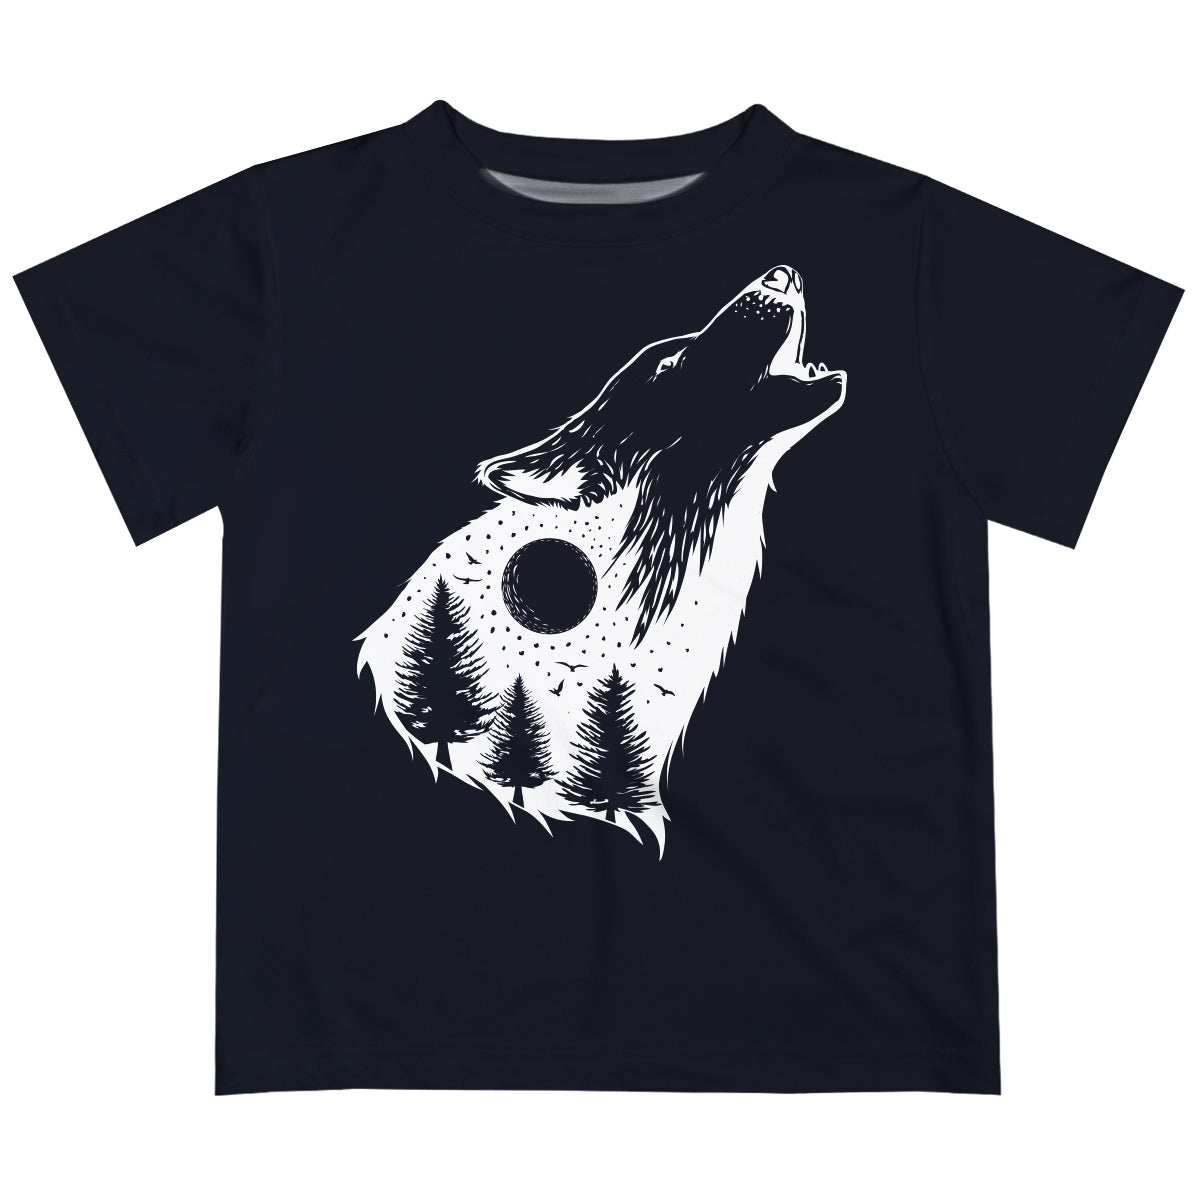 Boys black and white wolf short sleeve tee shirt - Wimziy&Co.